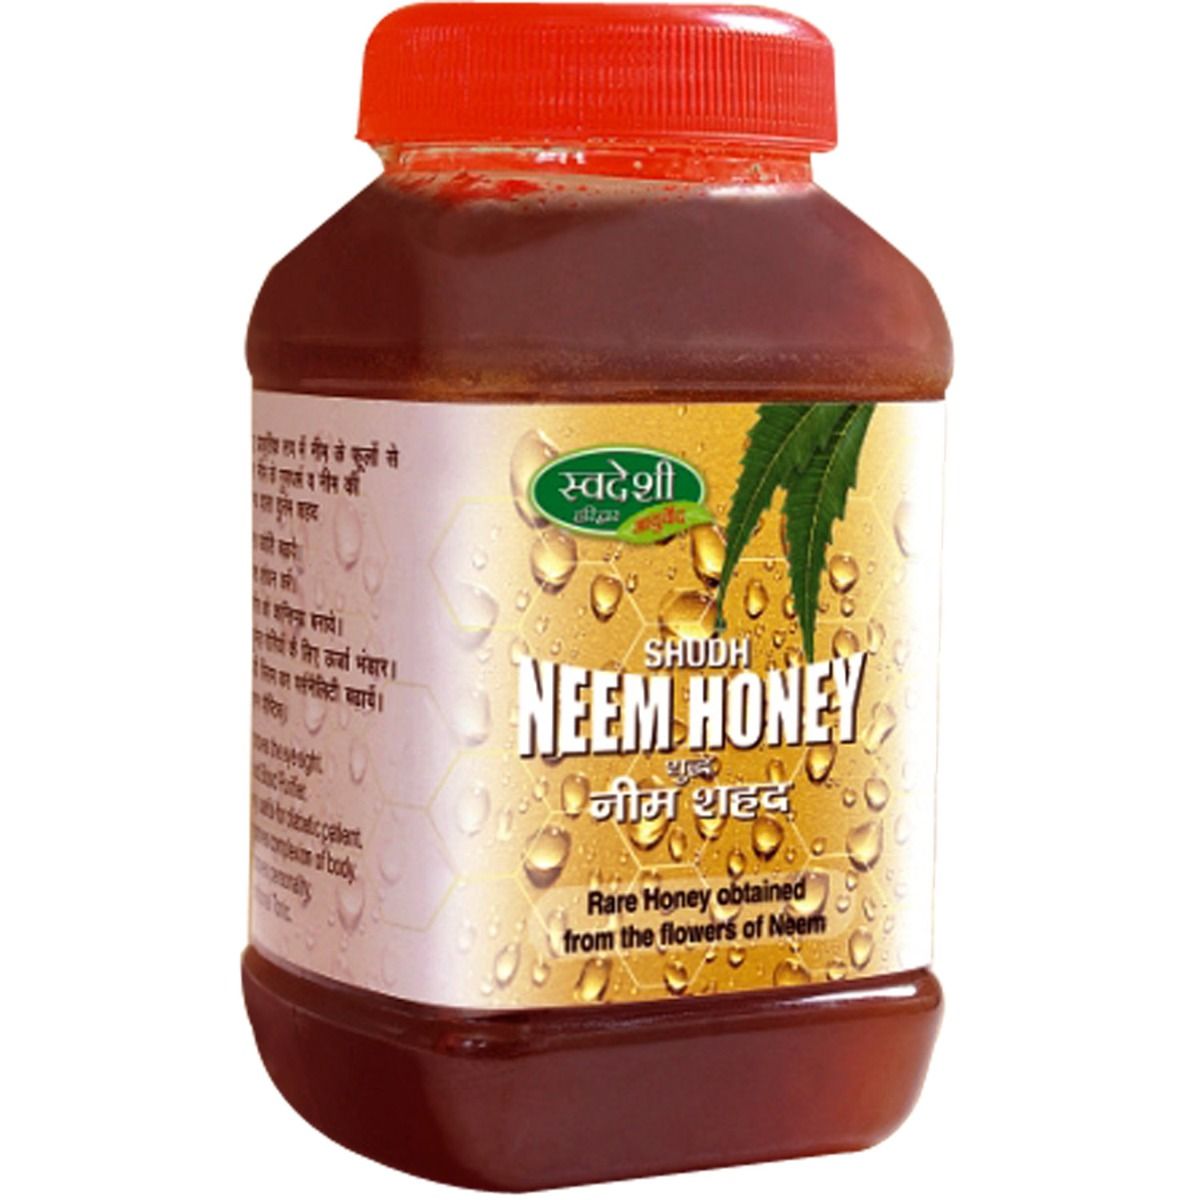 Buy Swadeshi Shudh Neem Honey, 250 gm Online